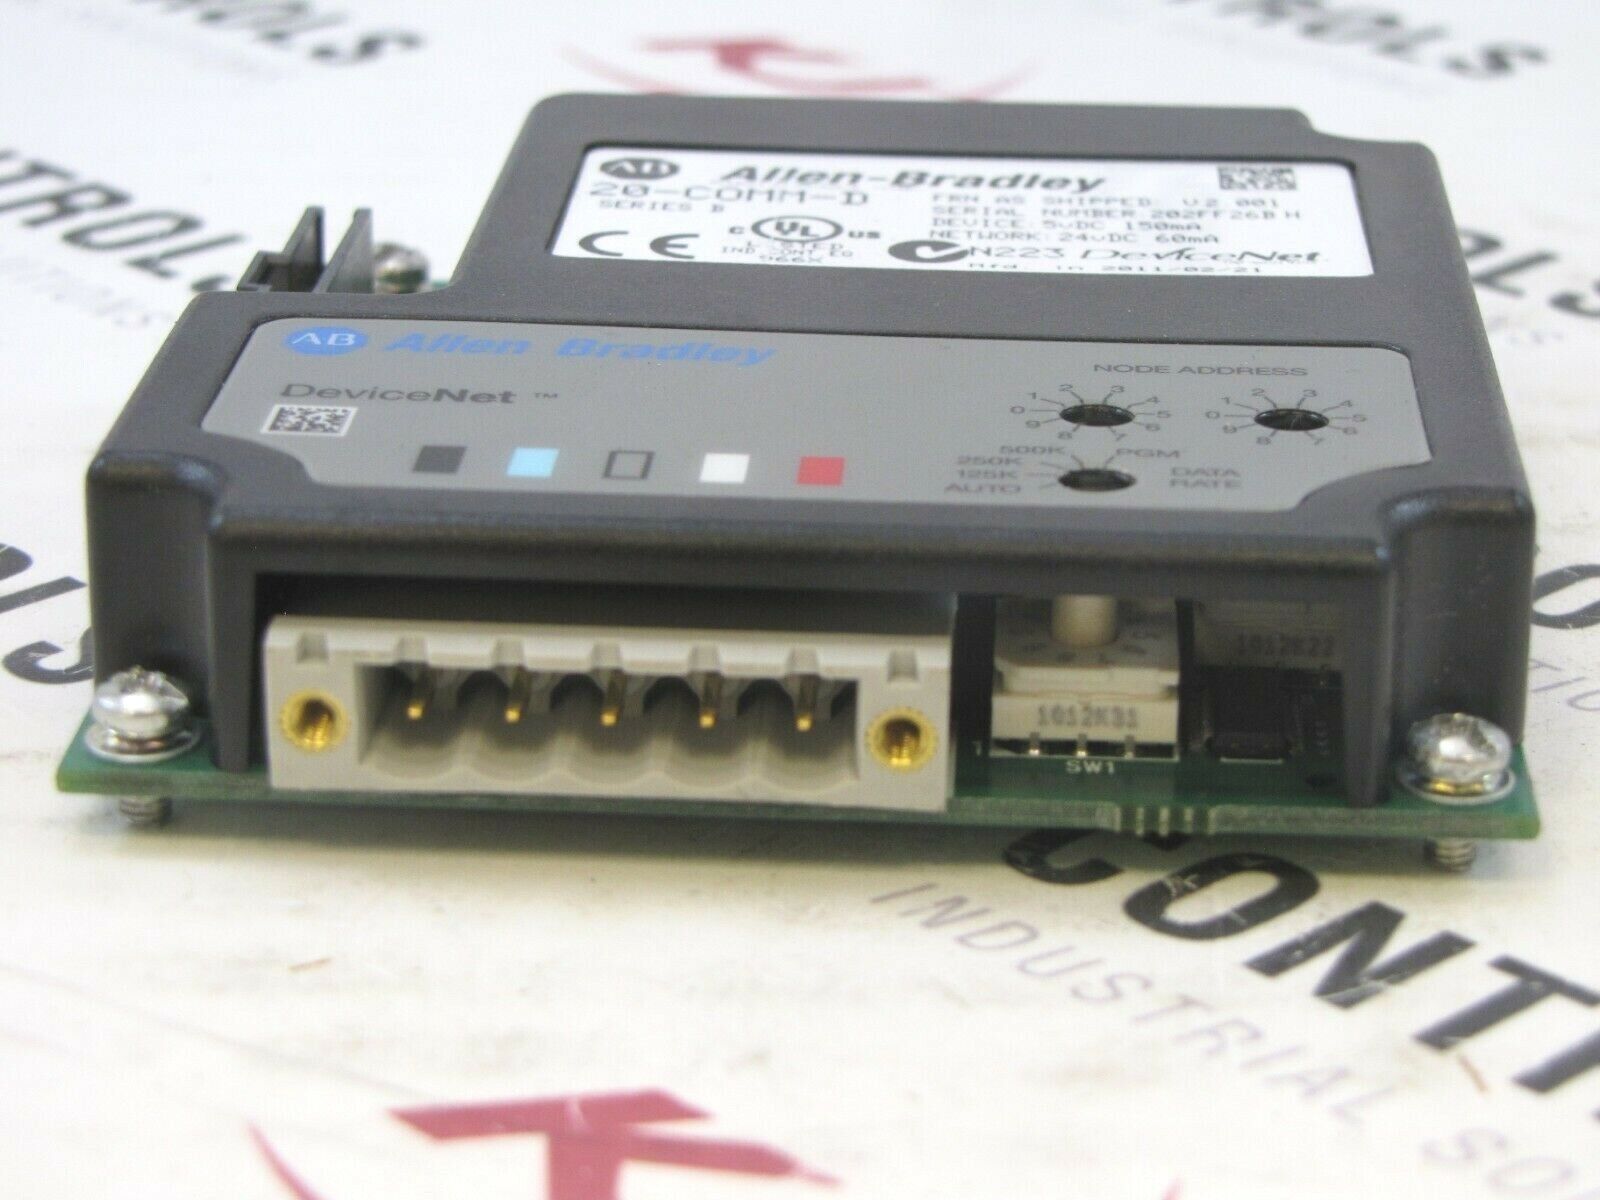 Allen-Bradley 20-COMM-D PowerFlex DeviceNet Communication Adapter